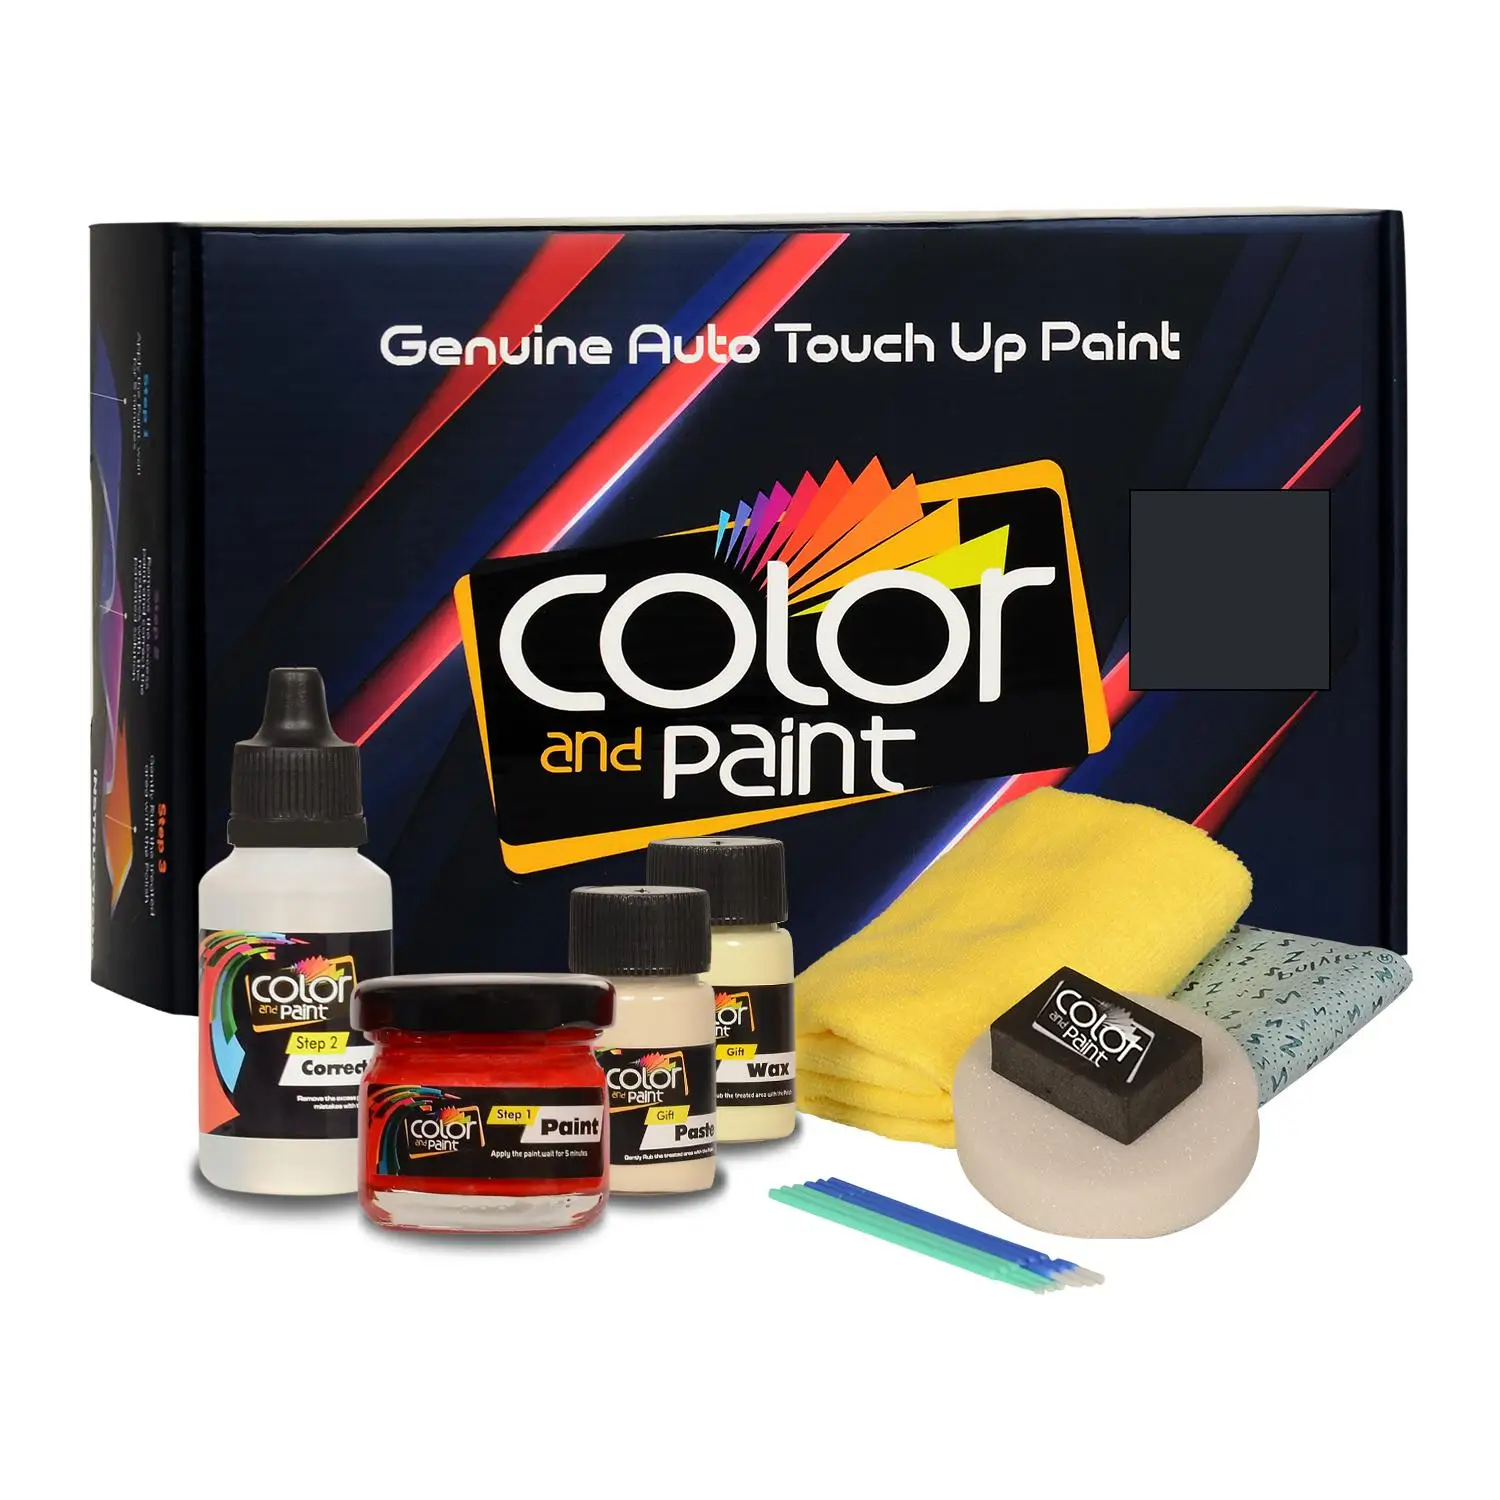 

Цвет и краска, совместимые с покраской Gilera Moto Touch Up Paint - GILERA NERO MICA MET-Gilera. MA001.0-базовый уход